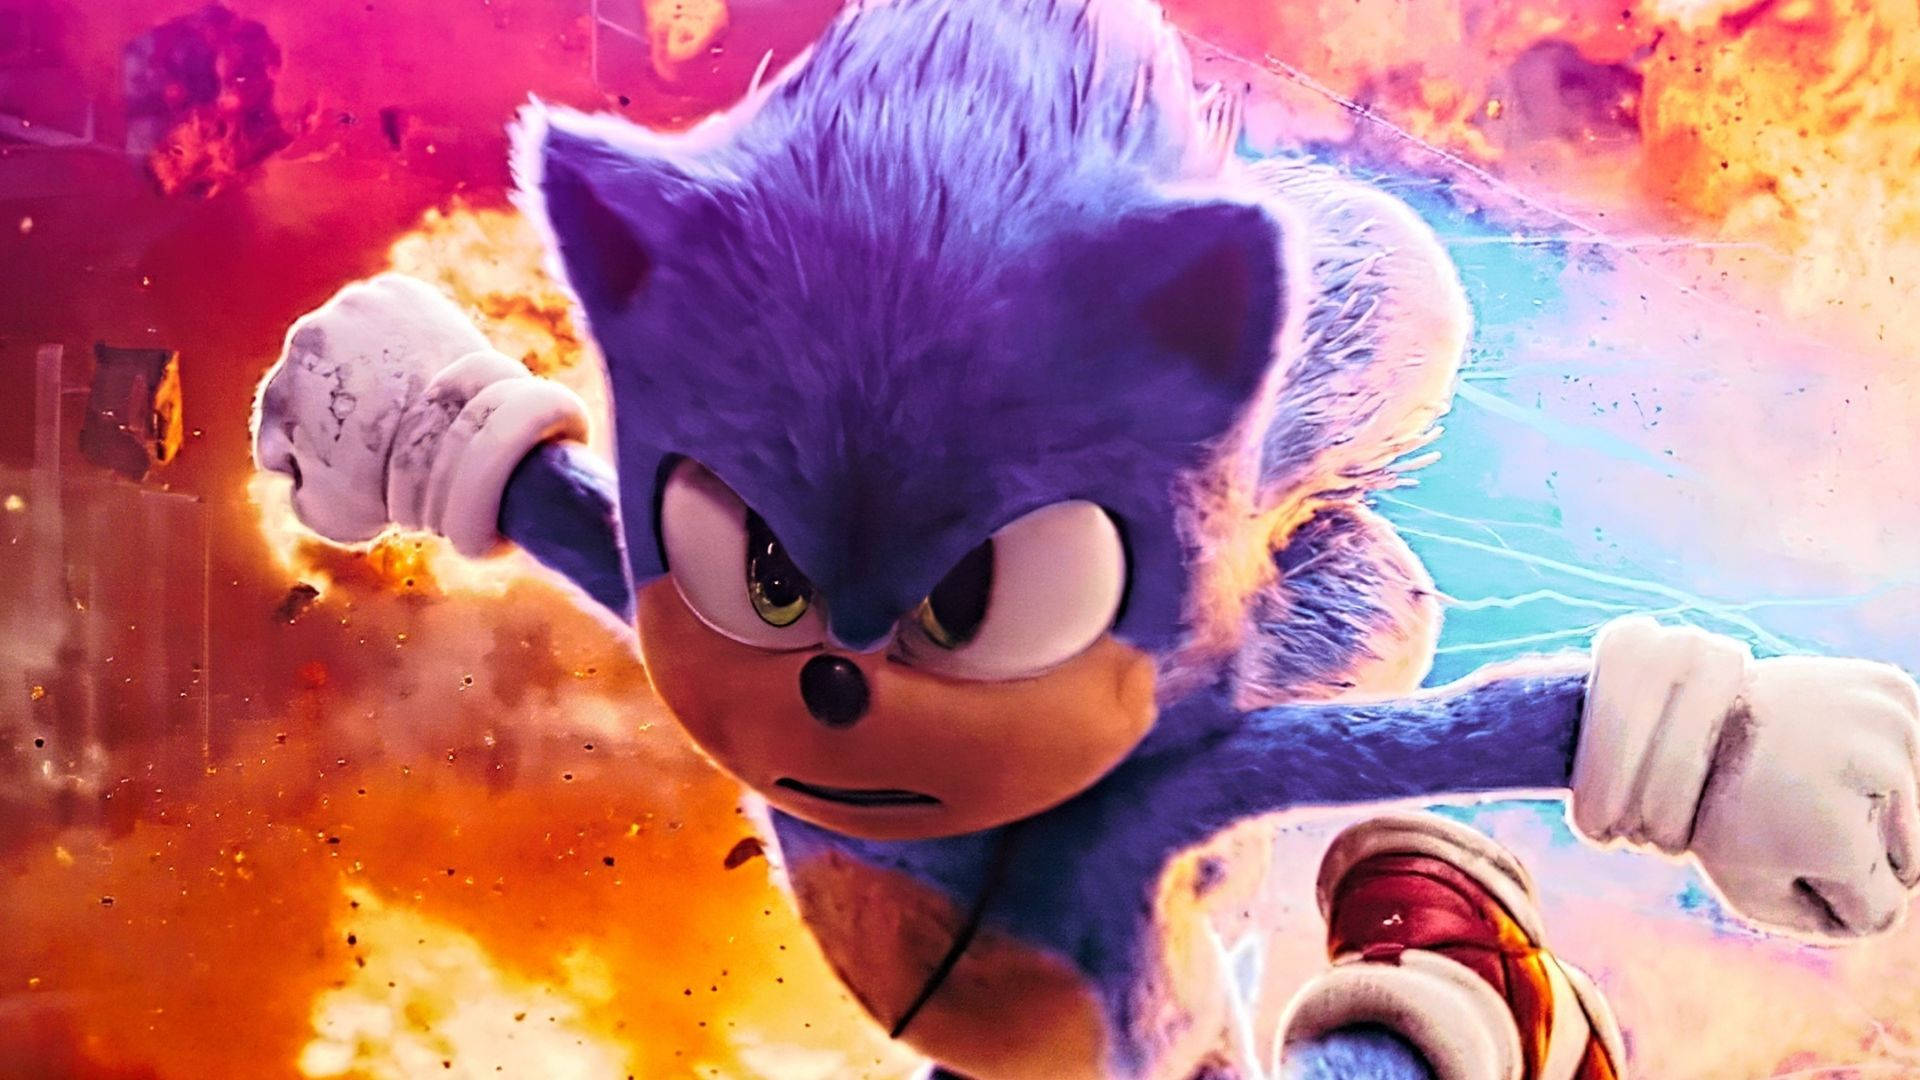 Free Sonic The Hedgehog Wallpaper Downloads, [100+] Sonic The Hedgehog  Wallpapers for FREE 